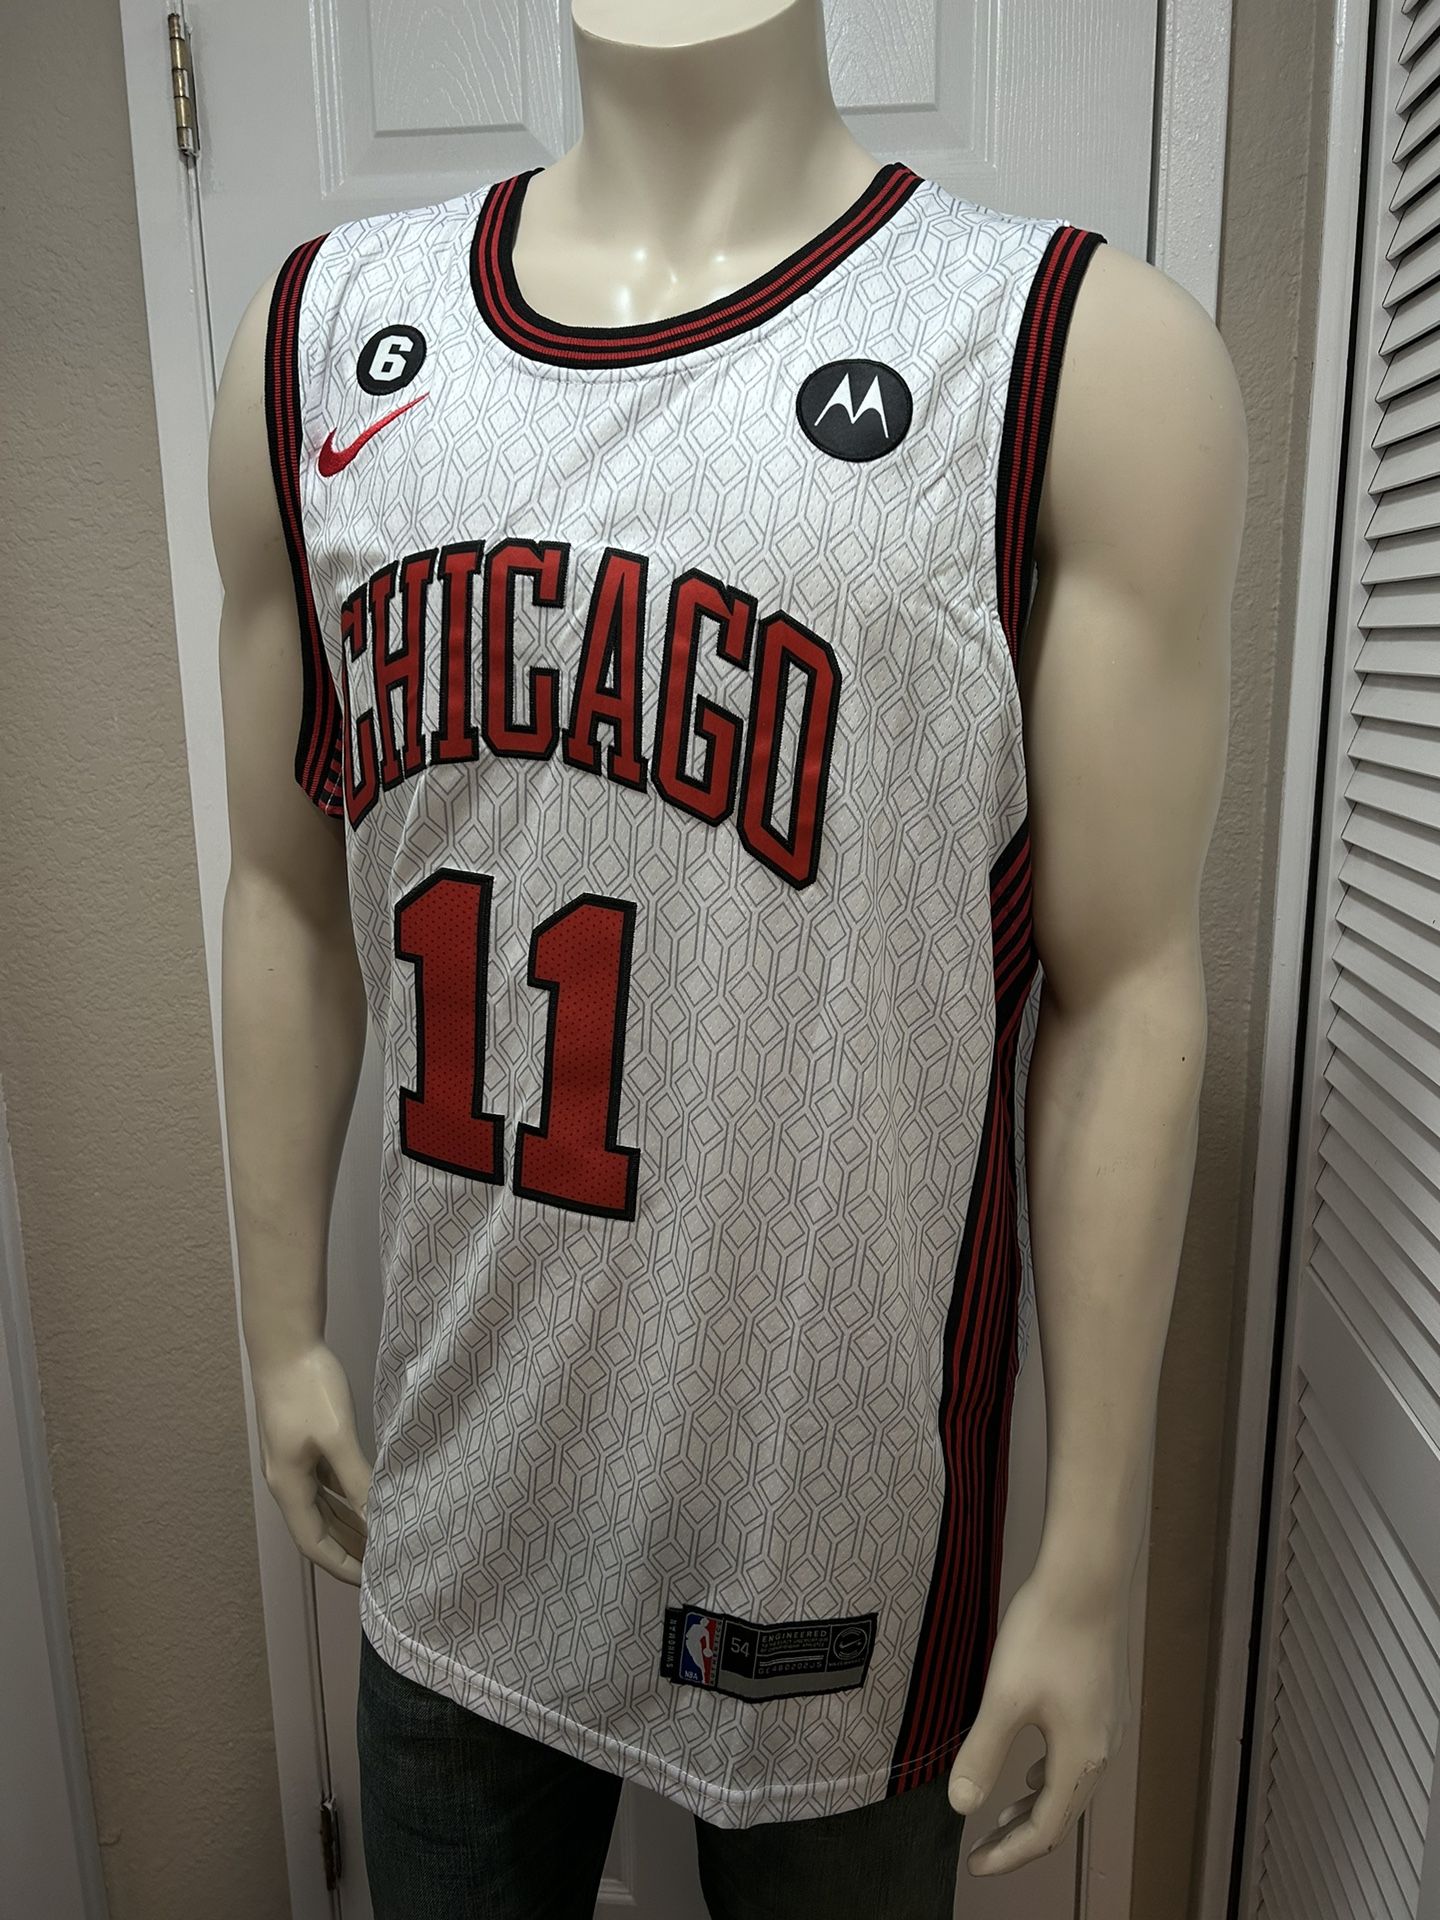 DeMar DeRozan Chicago Bulls City Edition Jersey